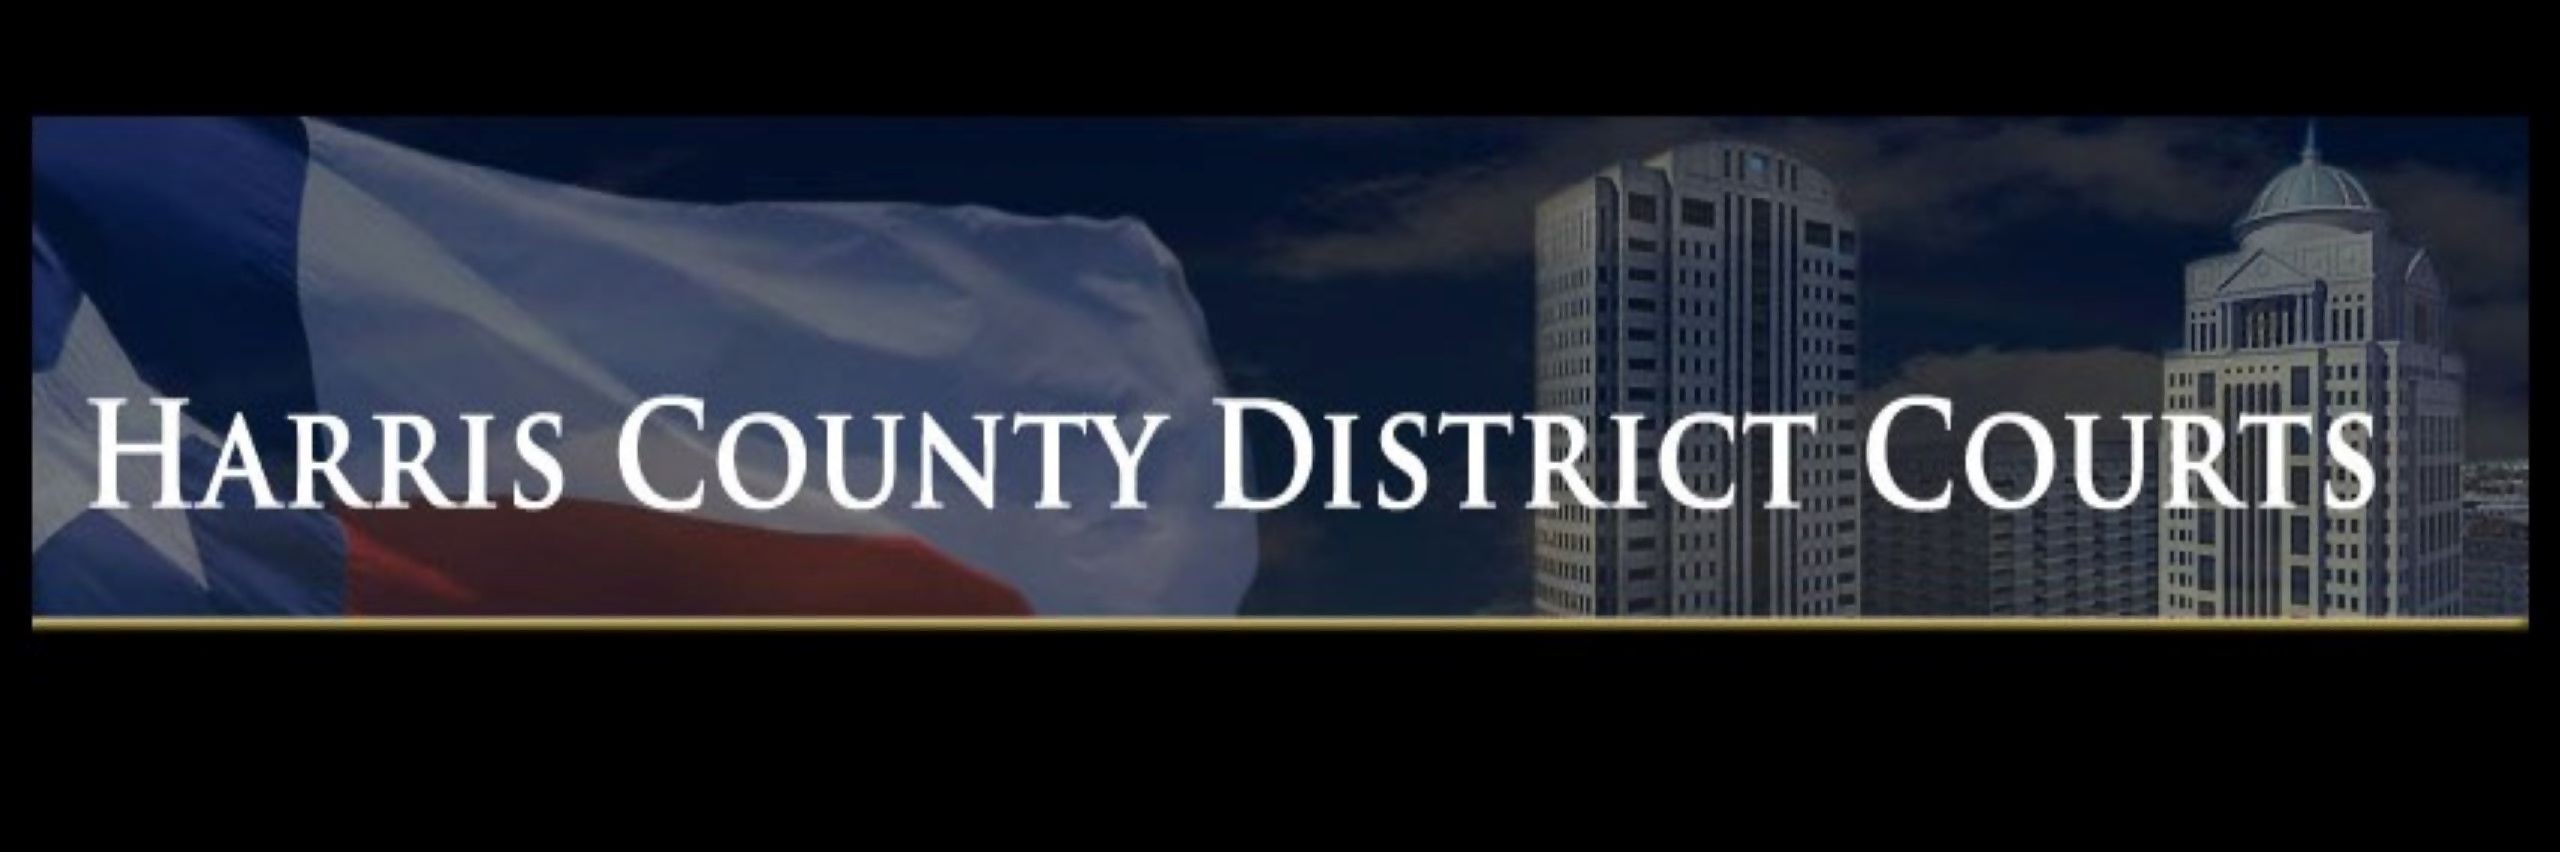 234th District Court - Live Stream